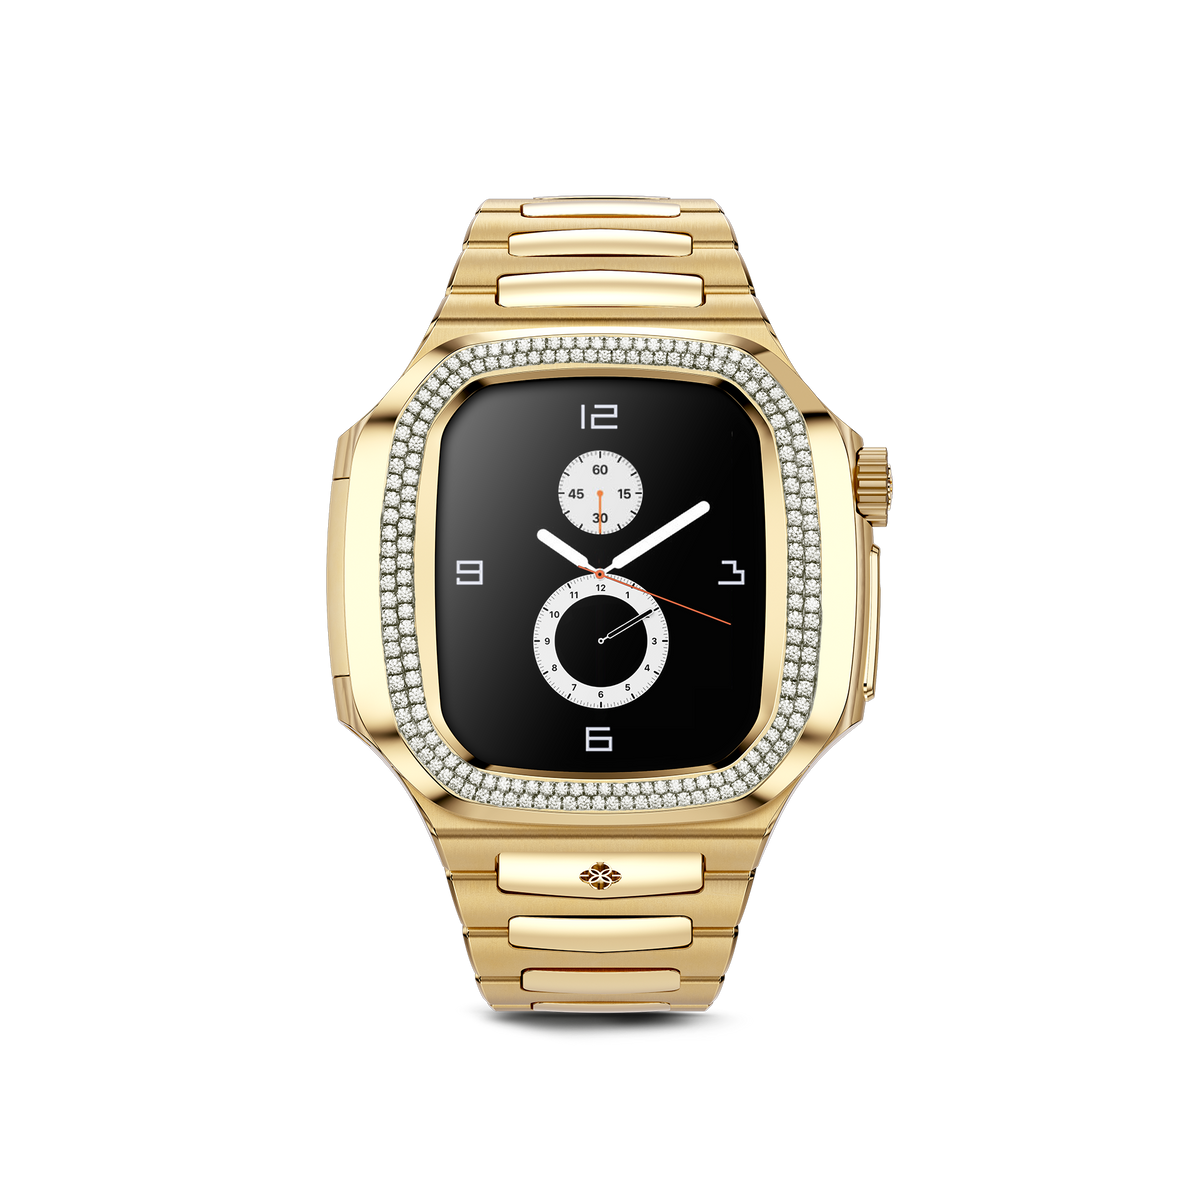 Apple Watch Case RO41 - Gold MD